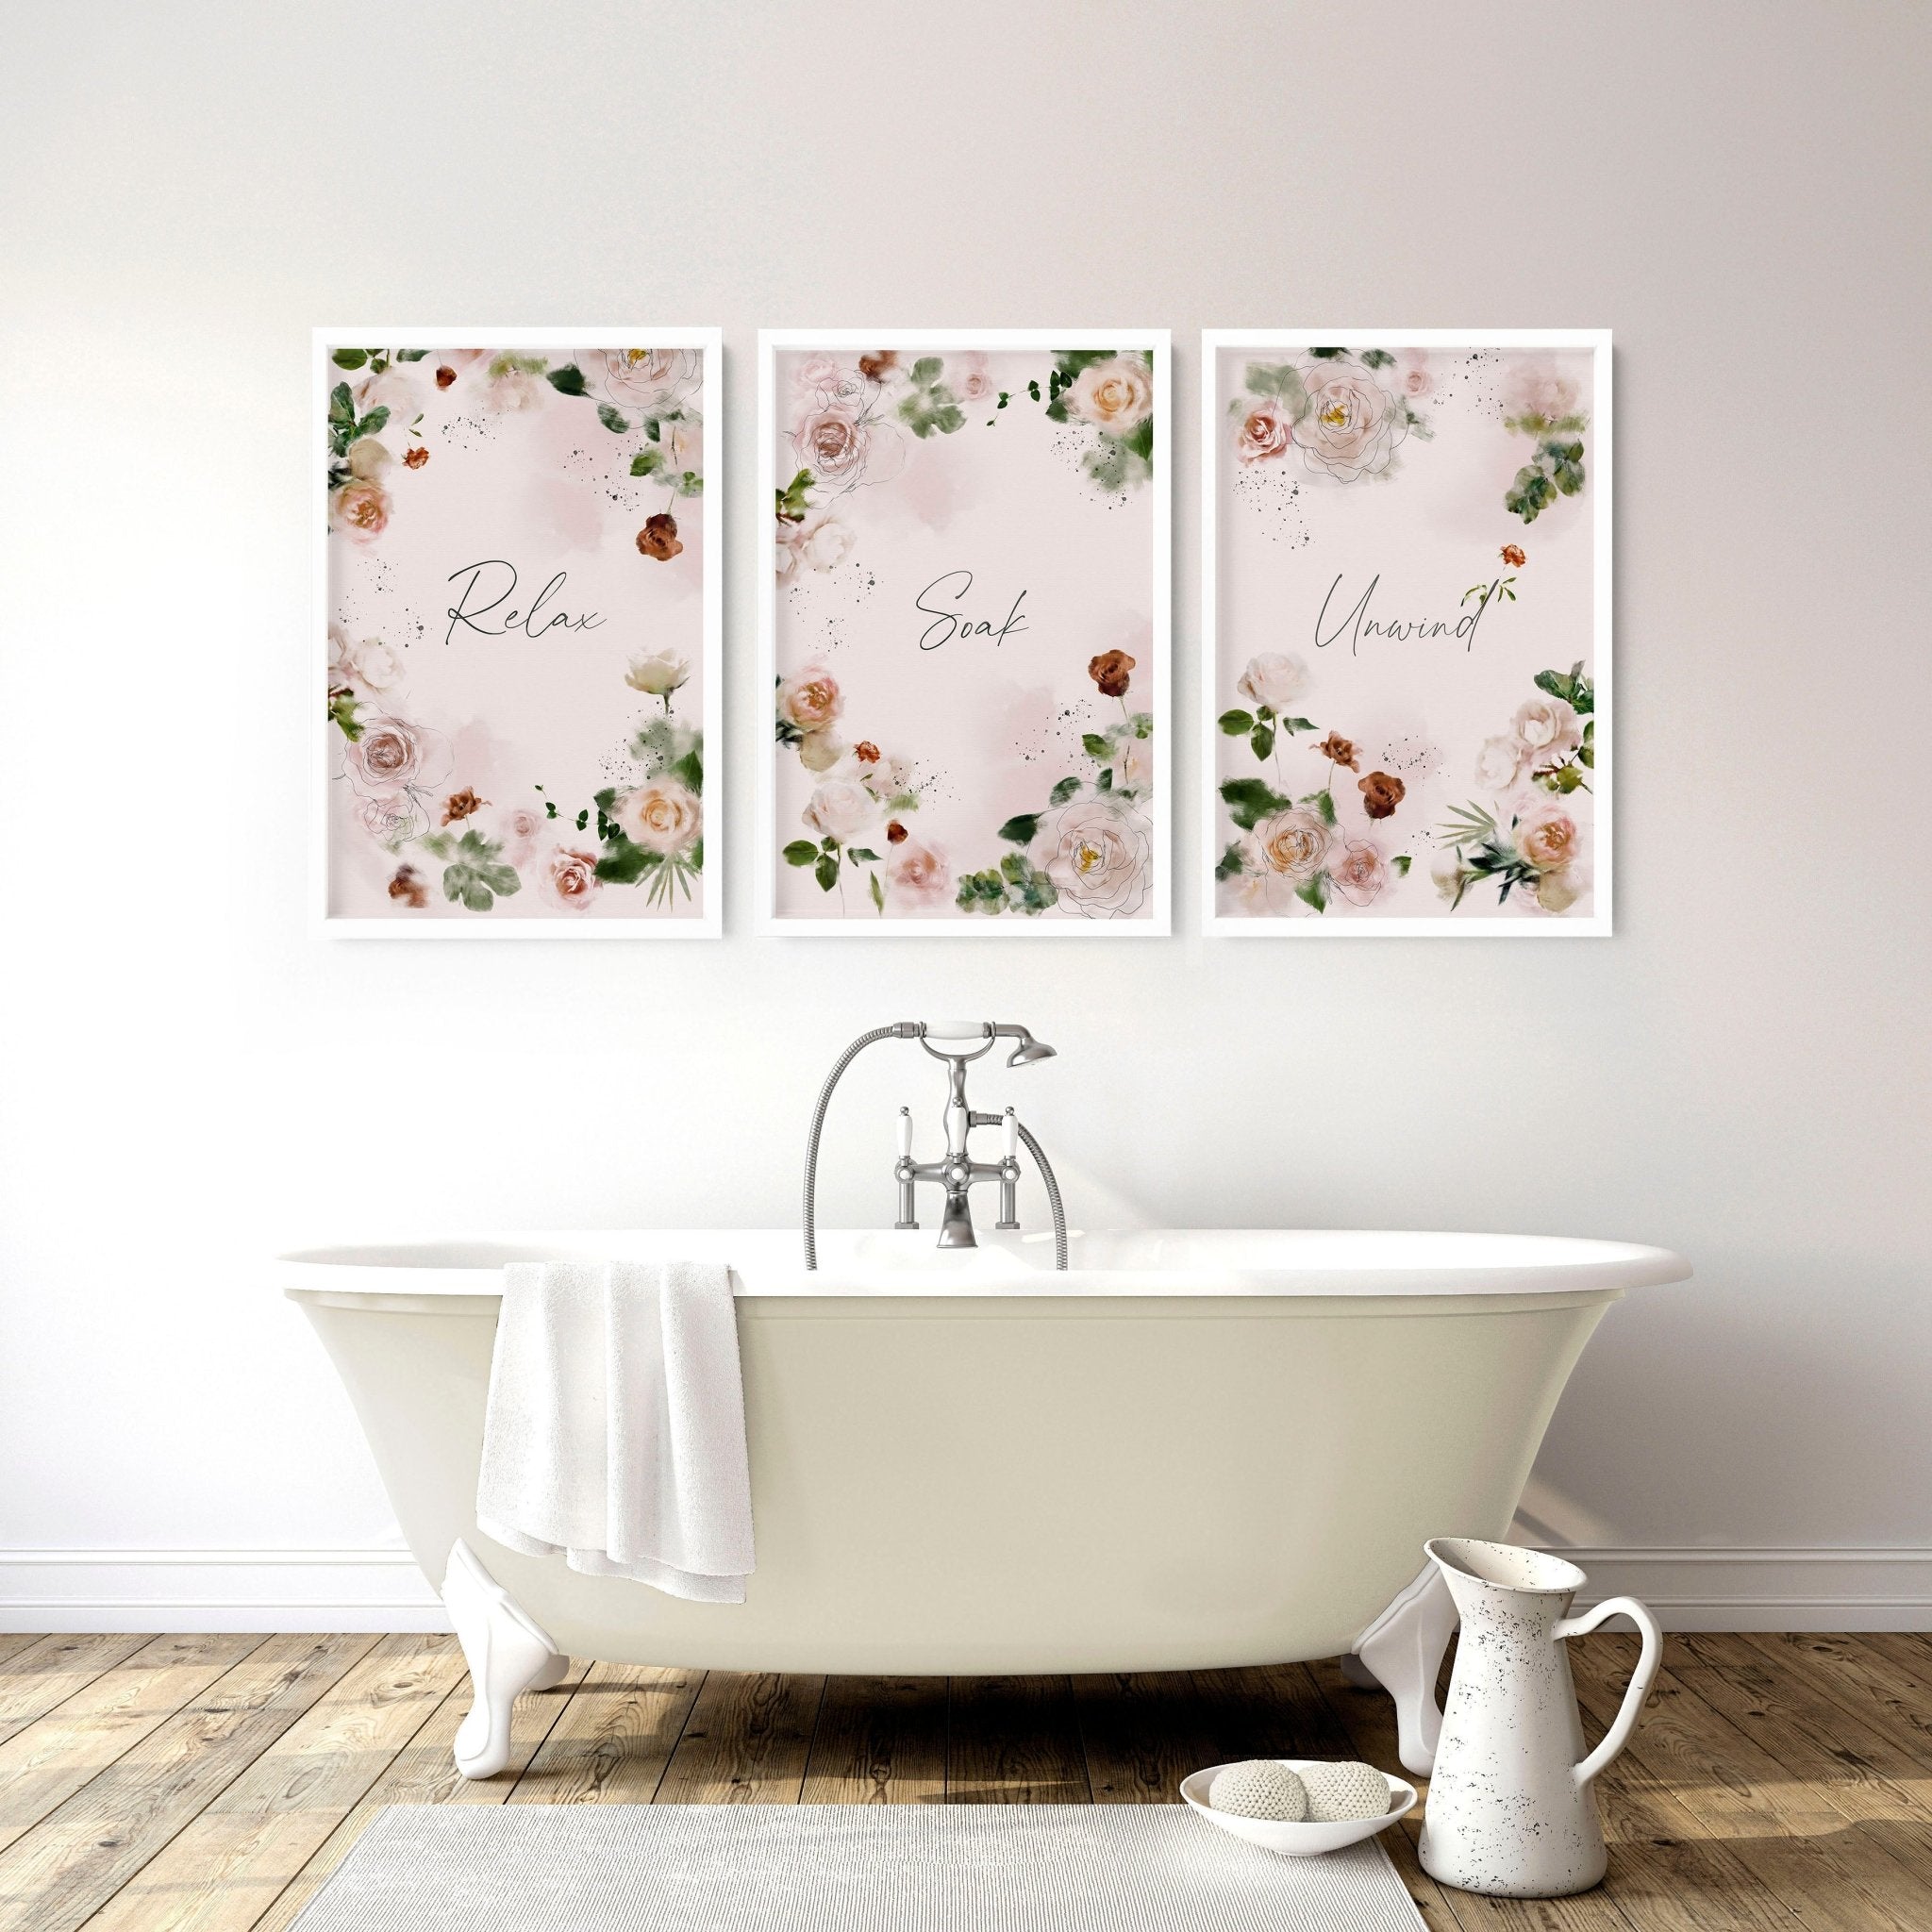 Shabby chic style | Bathroom set of 3 wall art prints